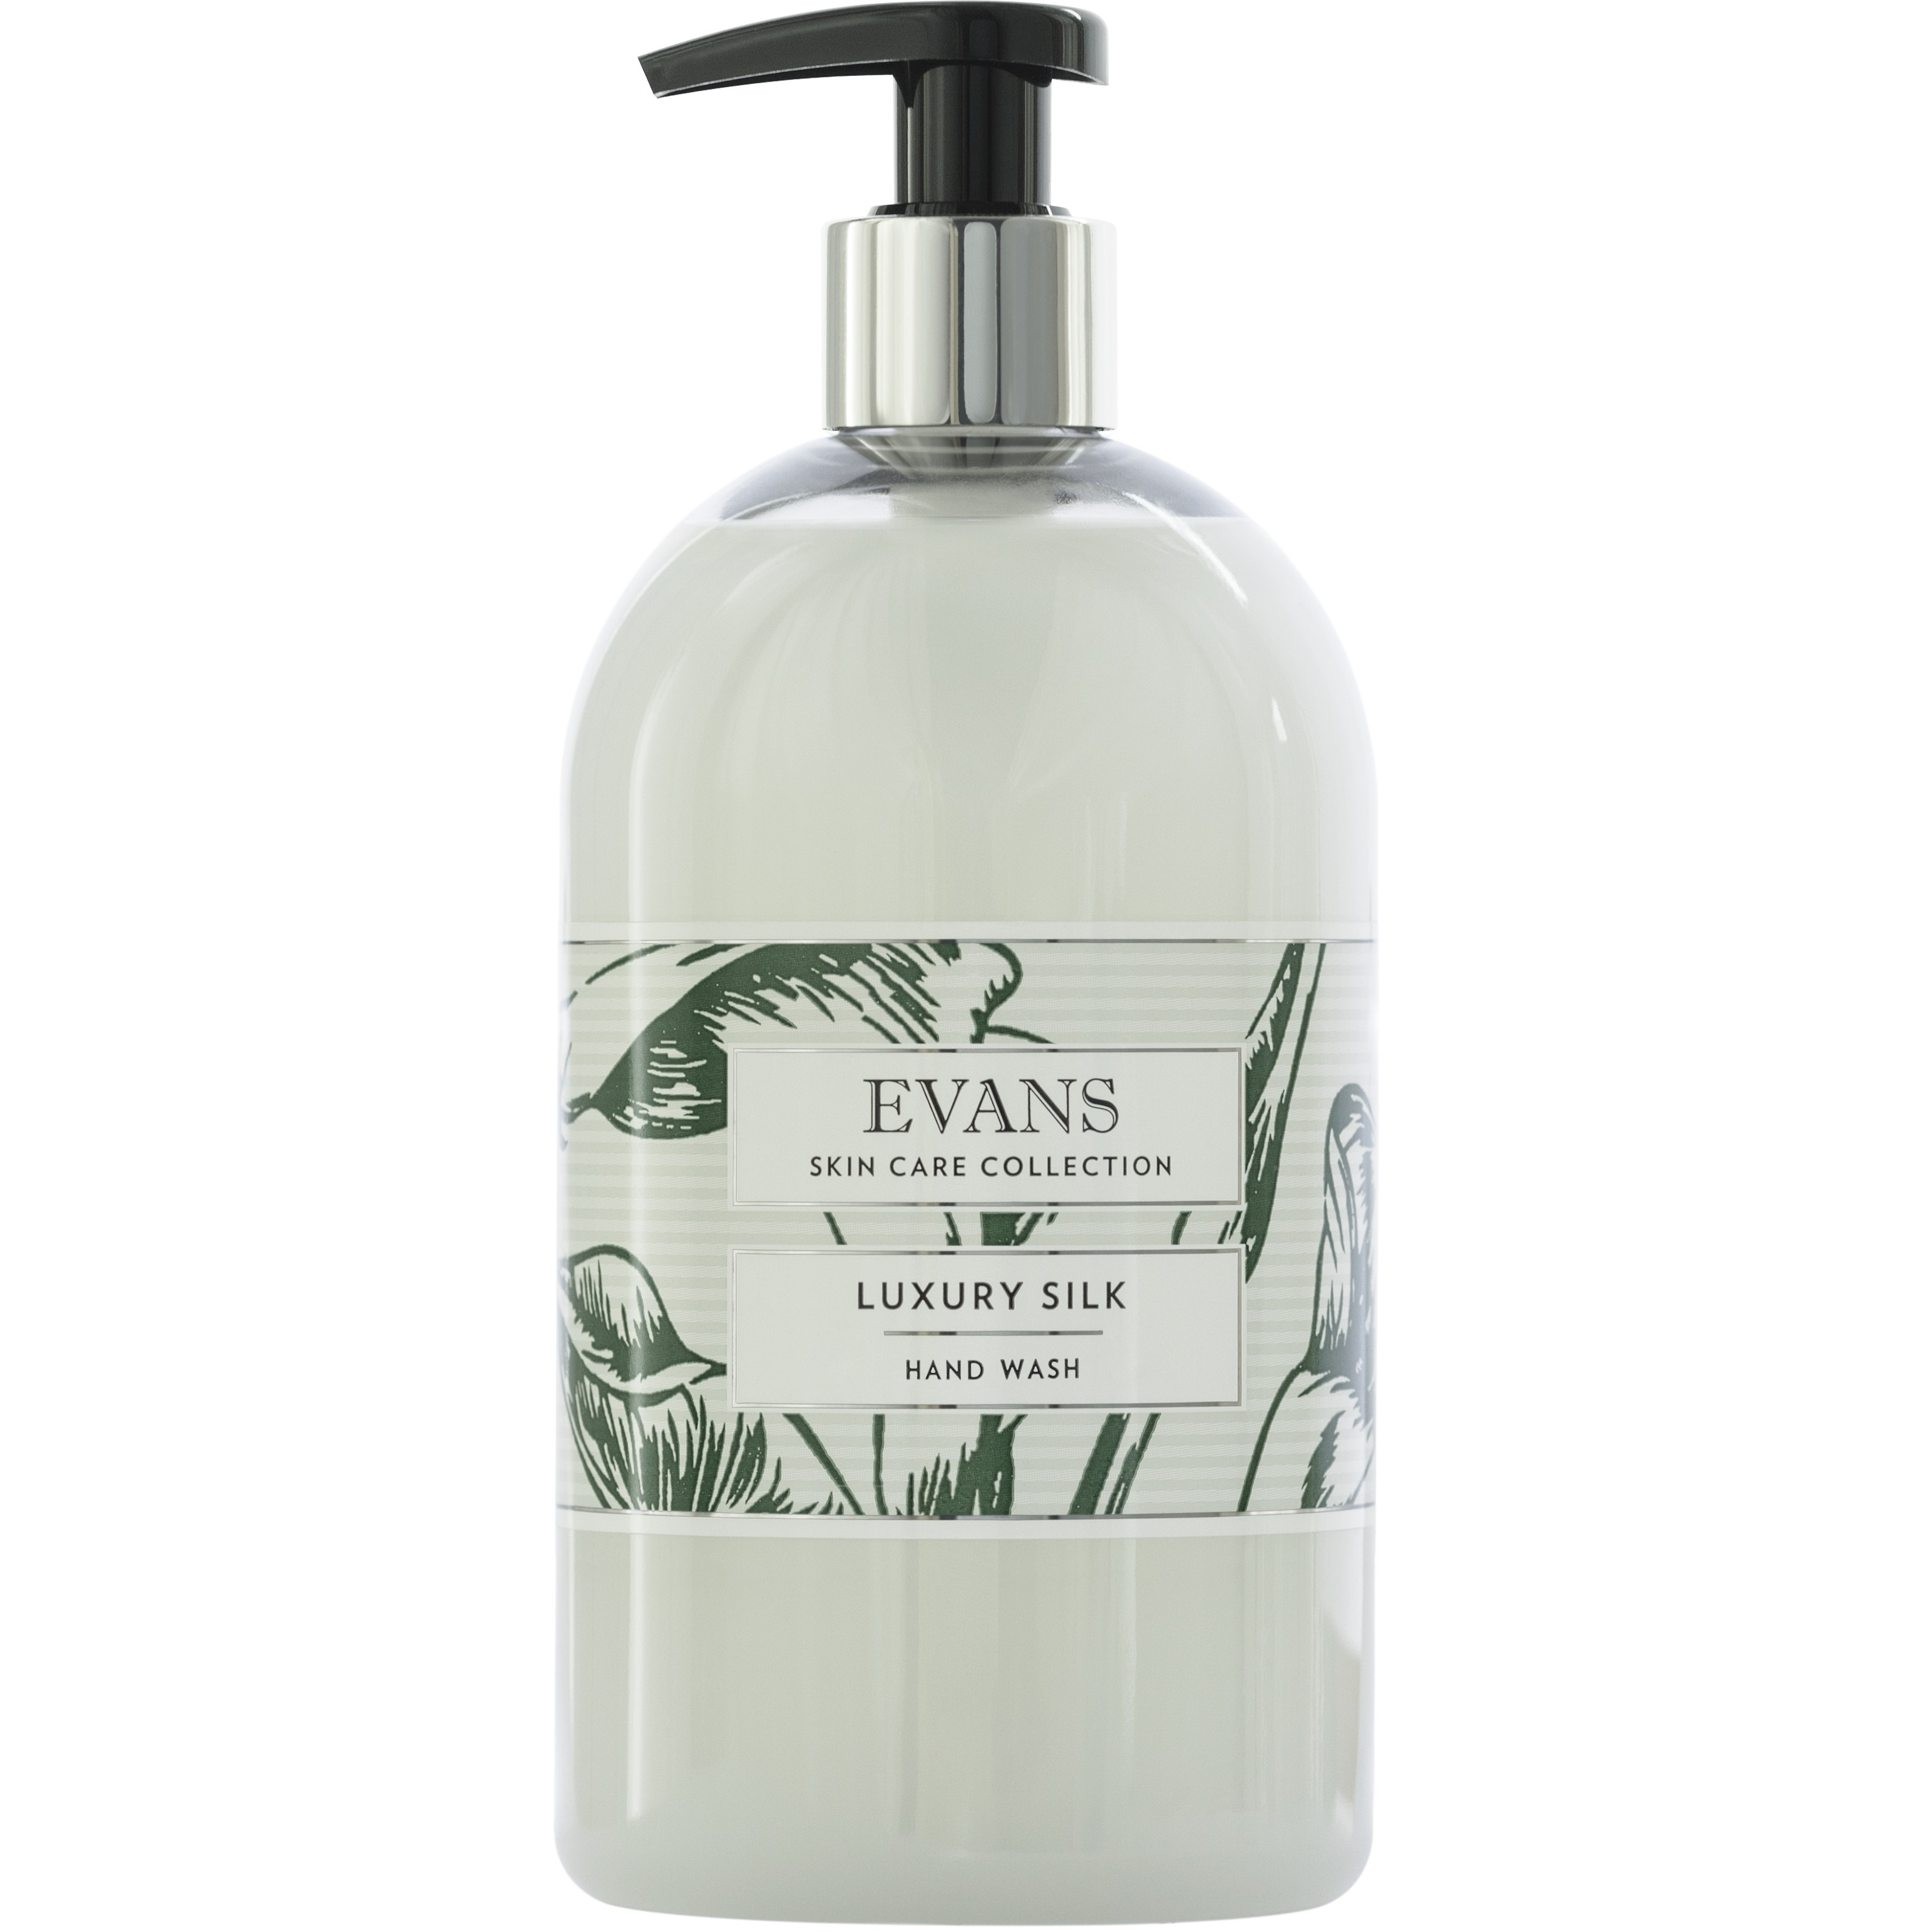 Evans Hand/Body Wash & Shampoo - Luxury Silk - Case of 6x500ml